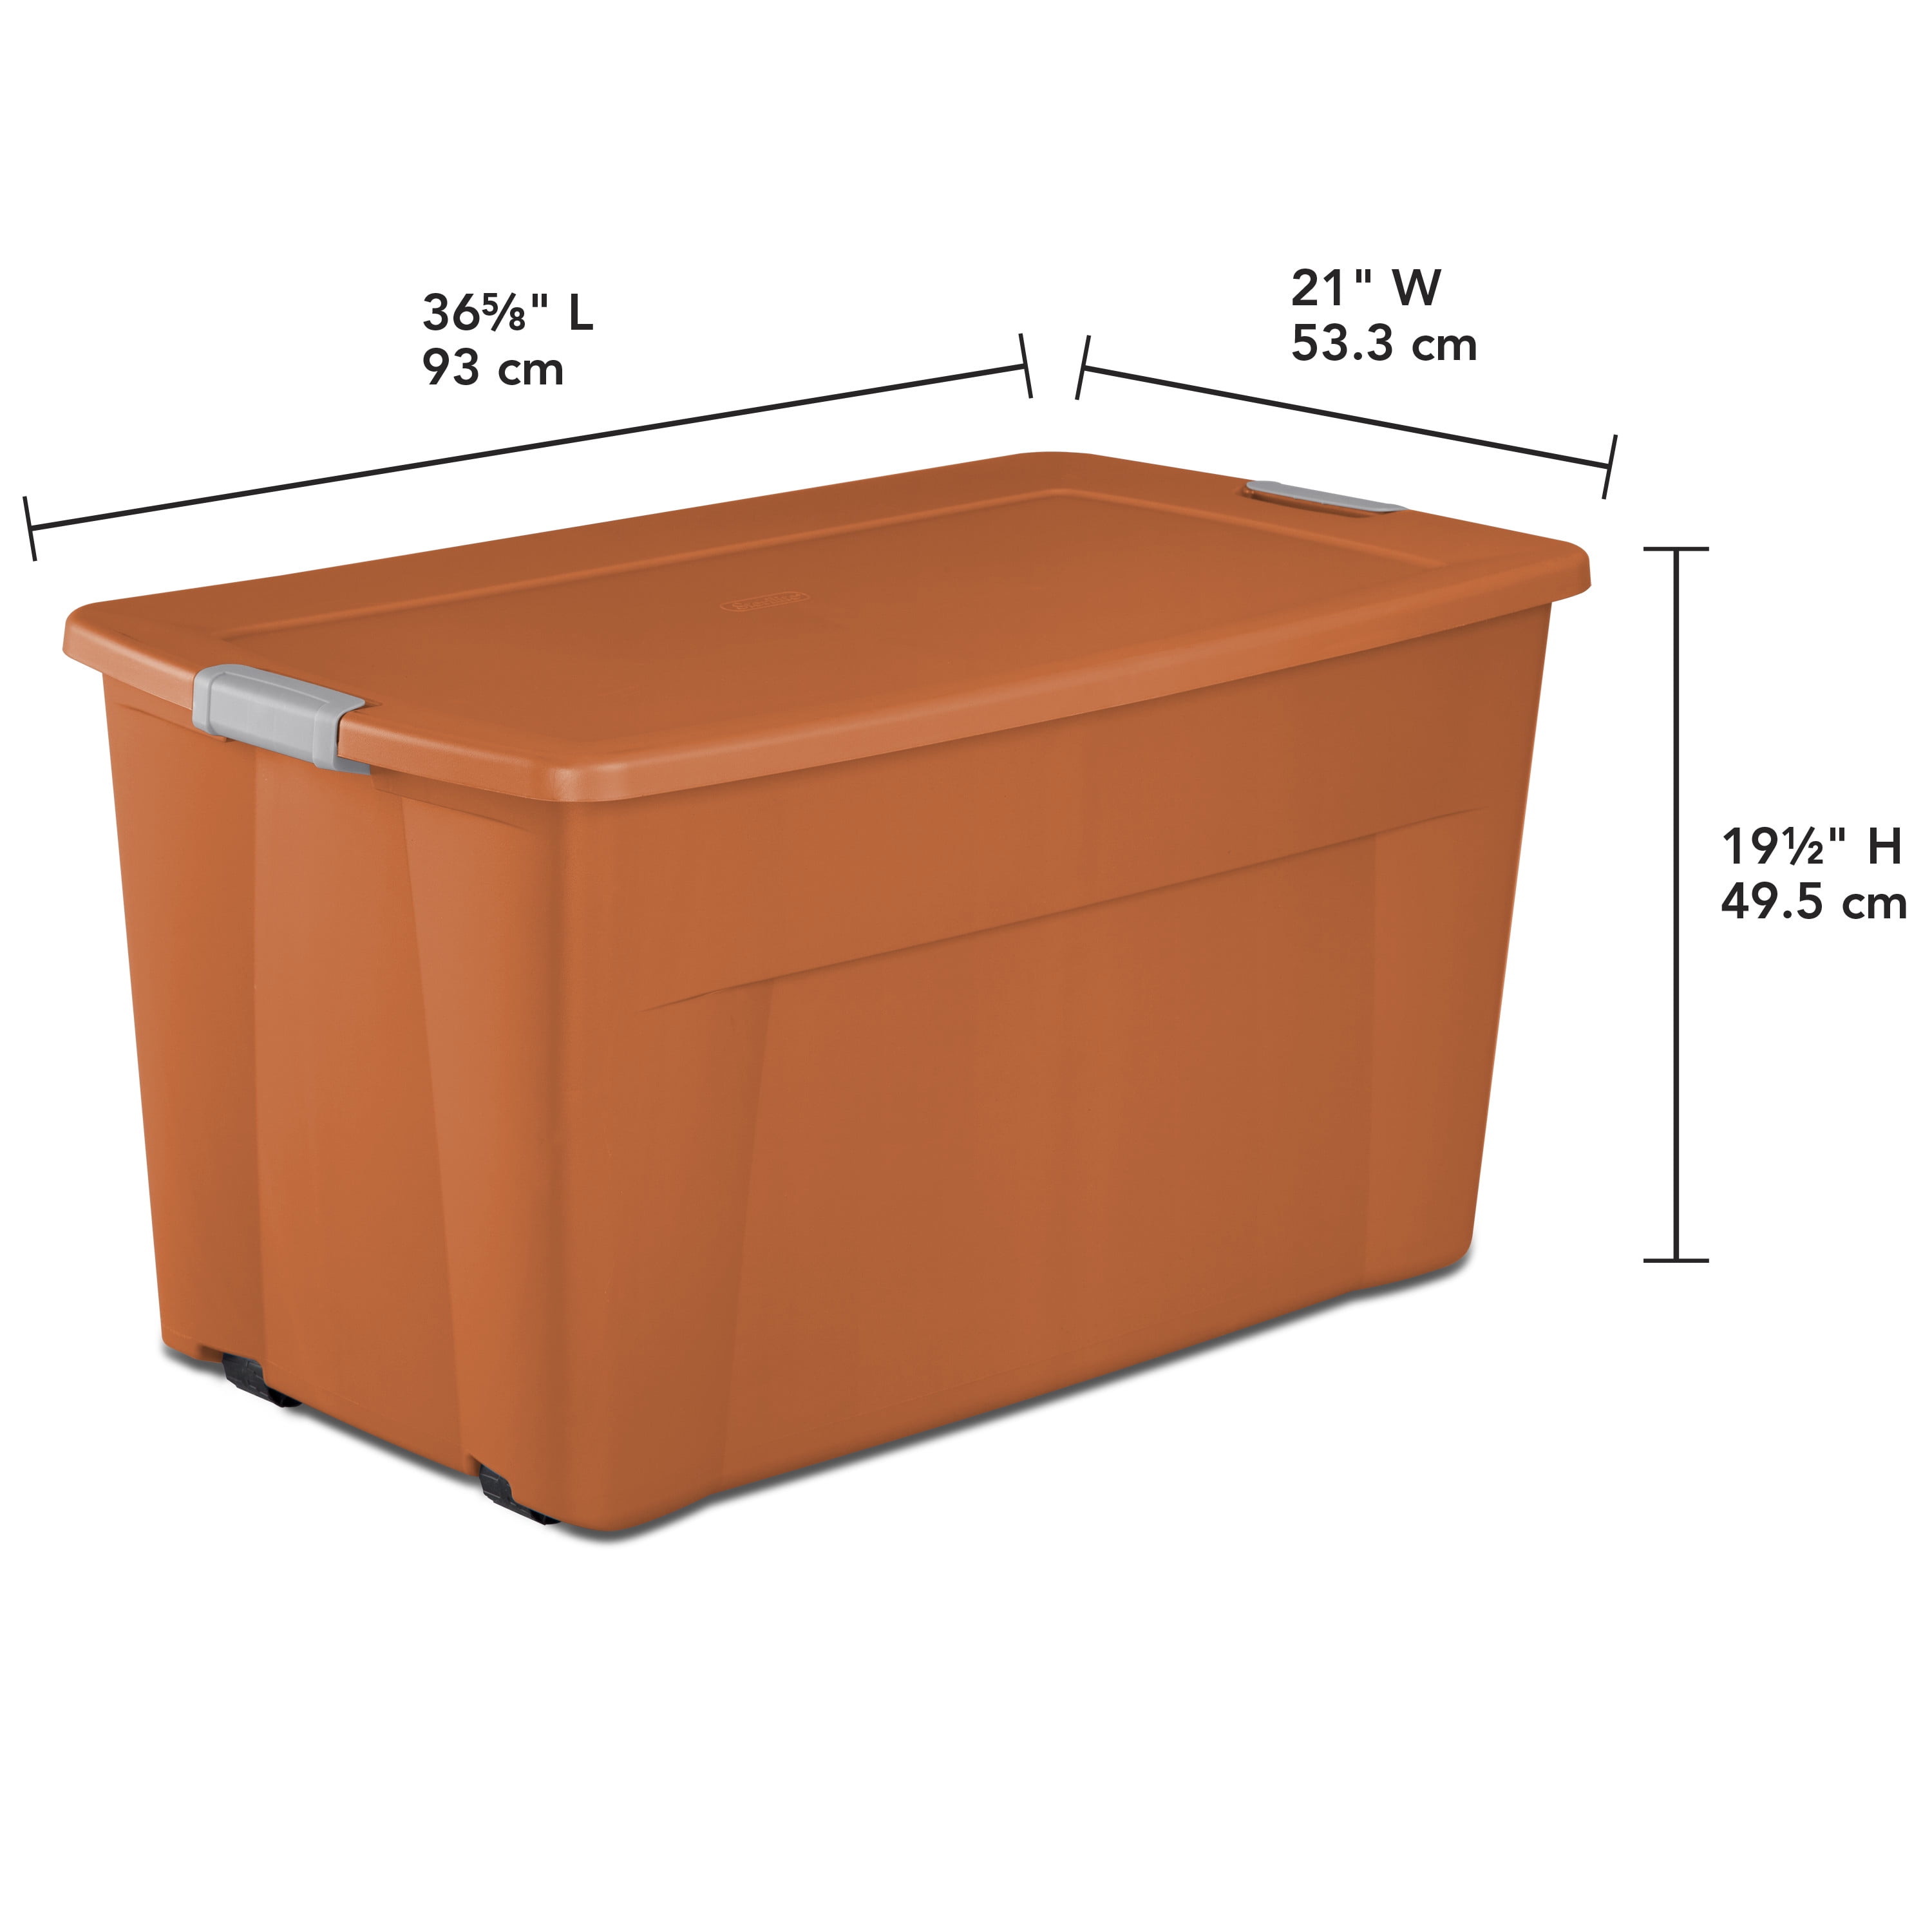 Large Orange Sterilite Storage Bin with wheels, 45 gallons